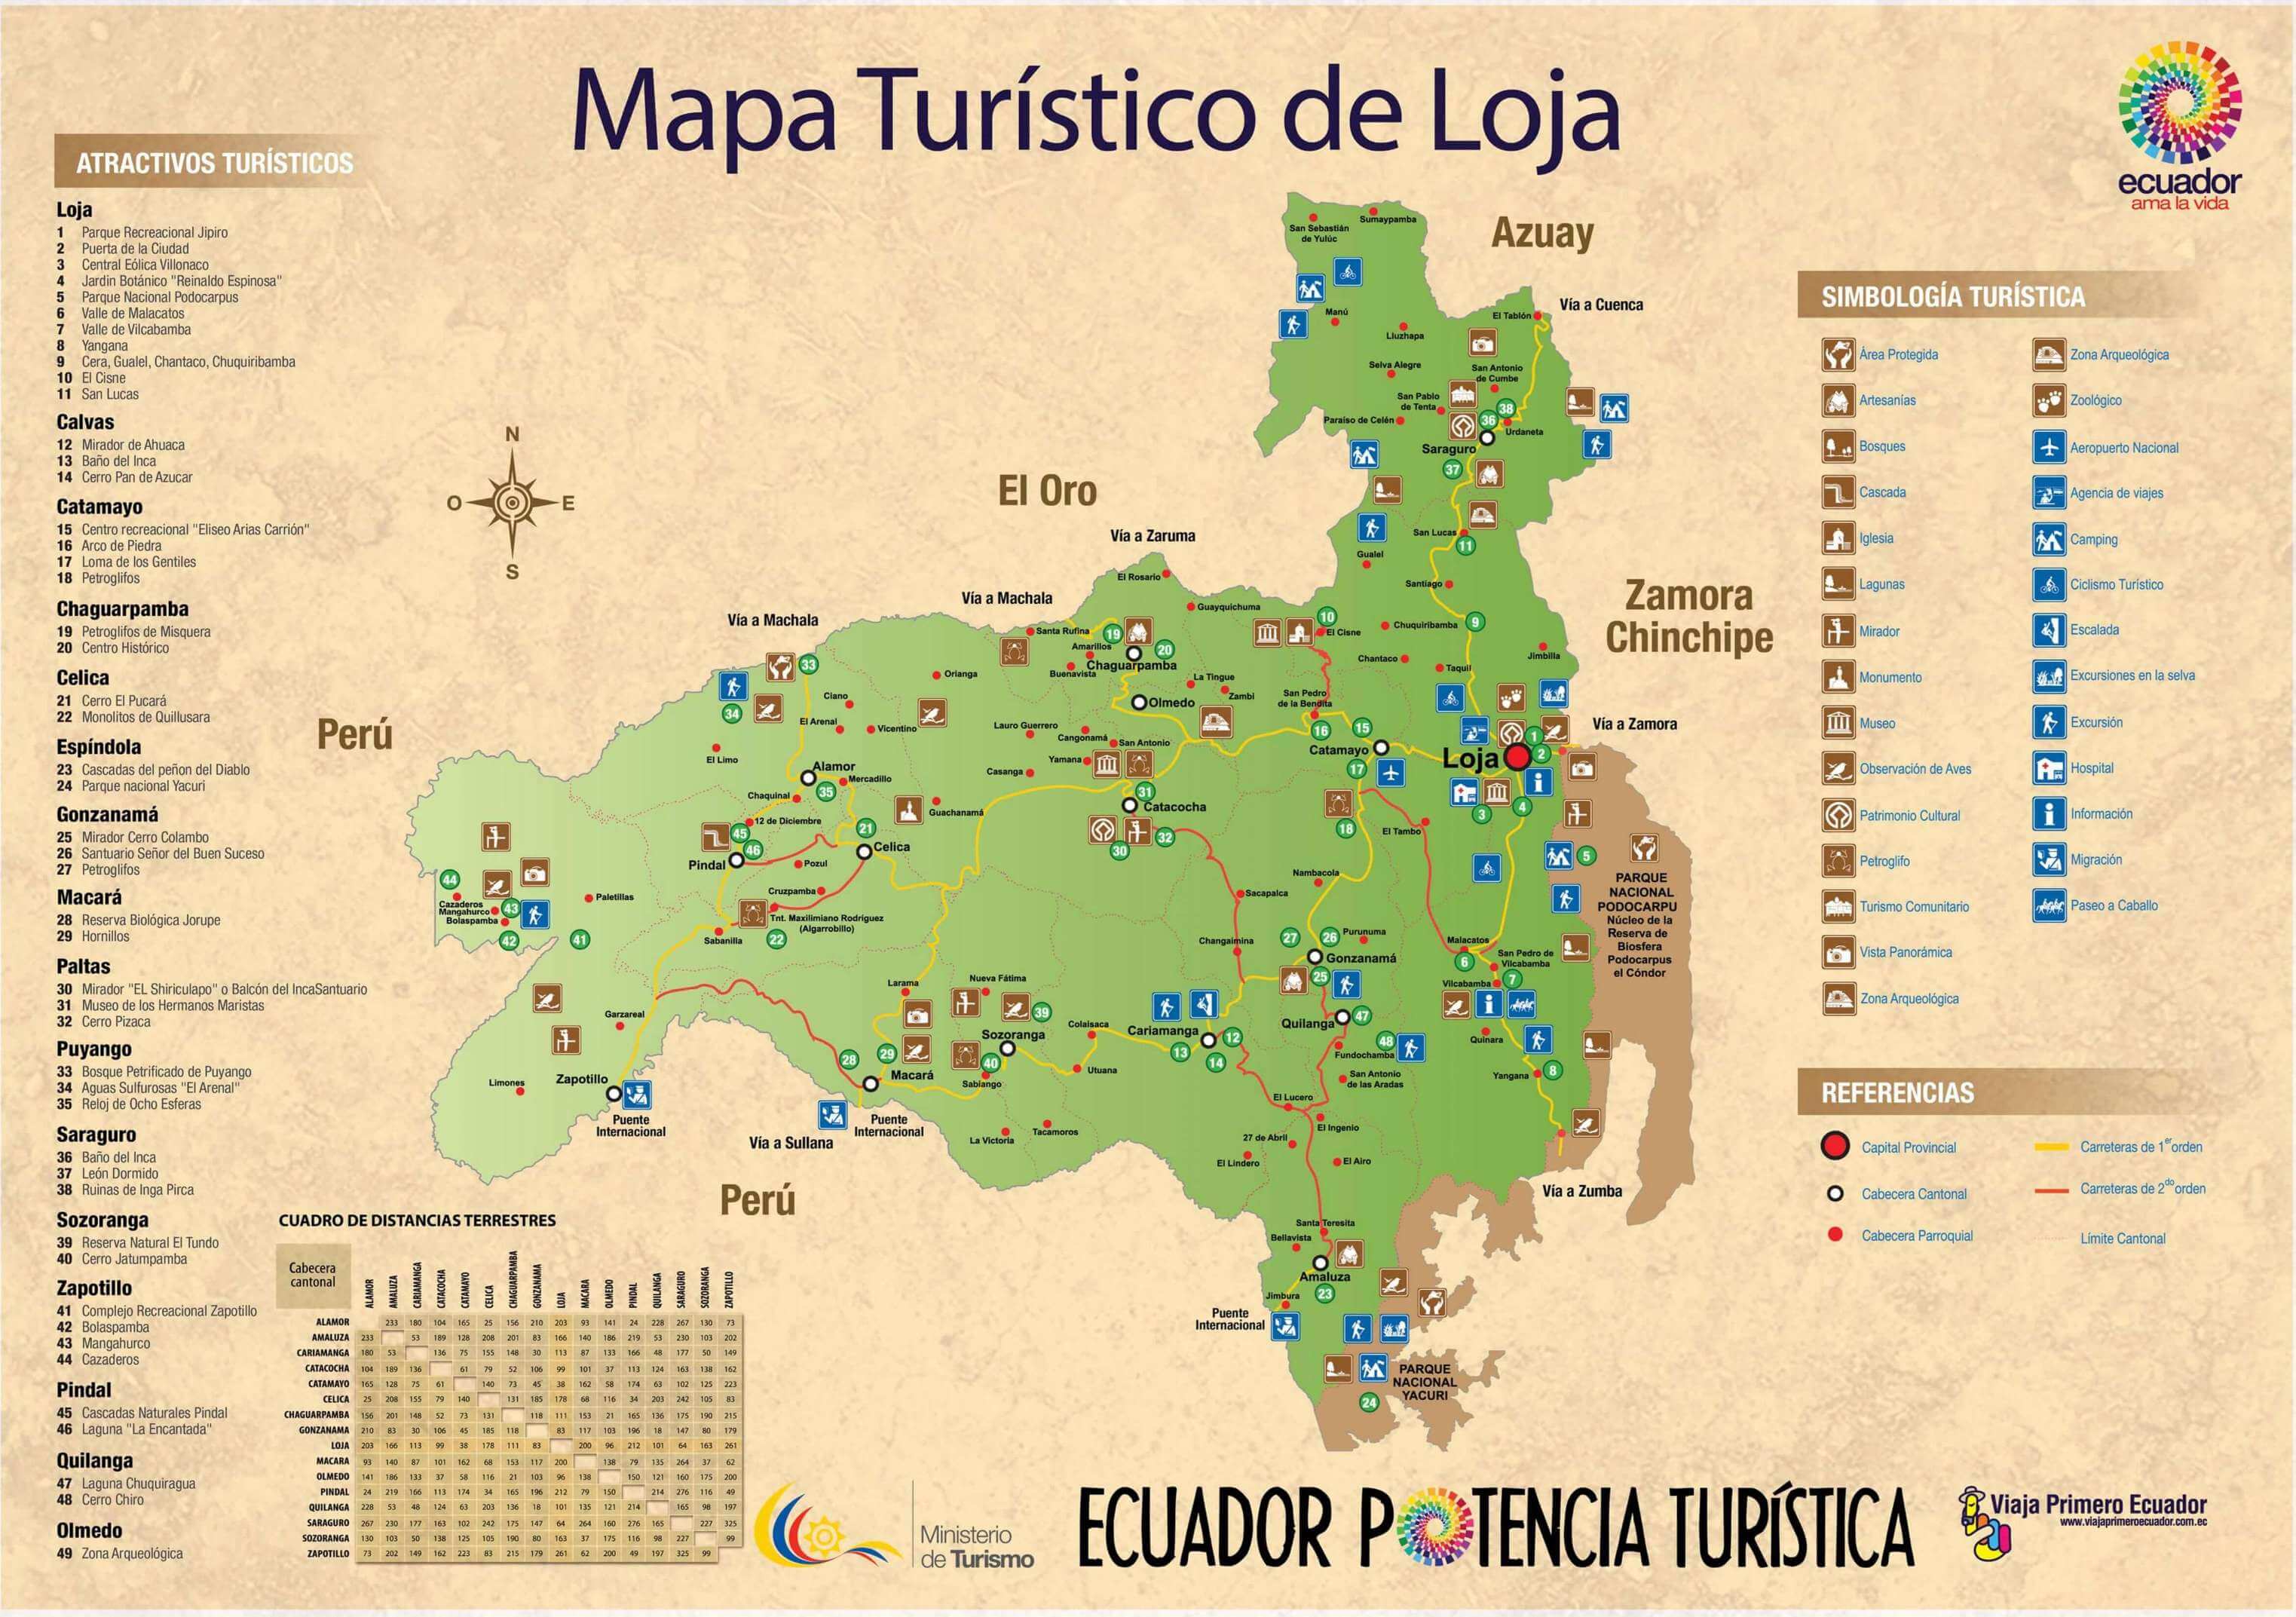 Tourist Attractions Map of Loja, Ecuador - PlanetAndes